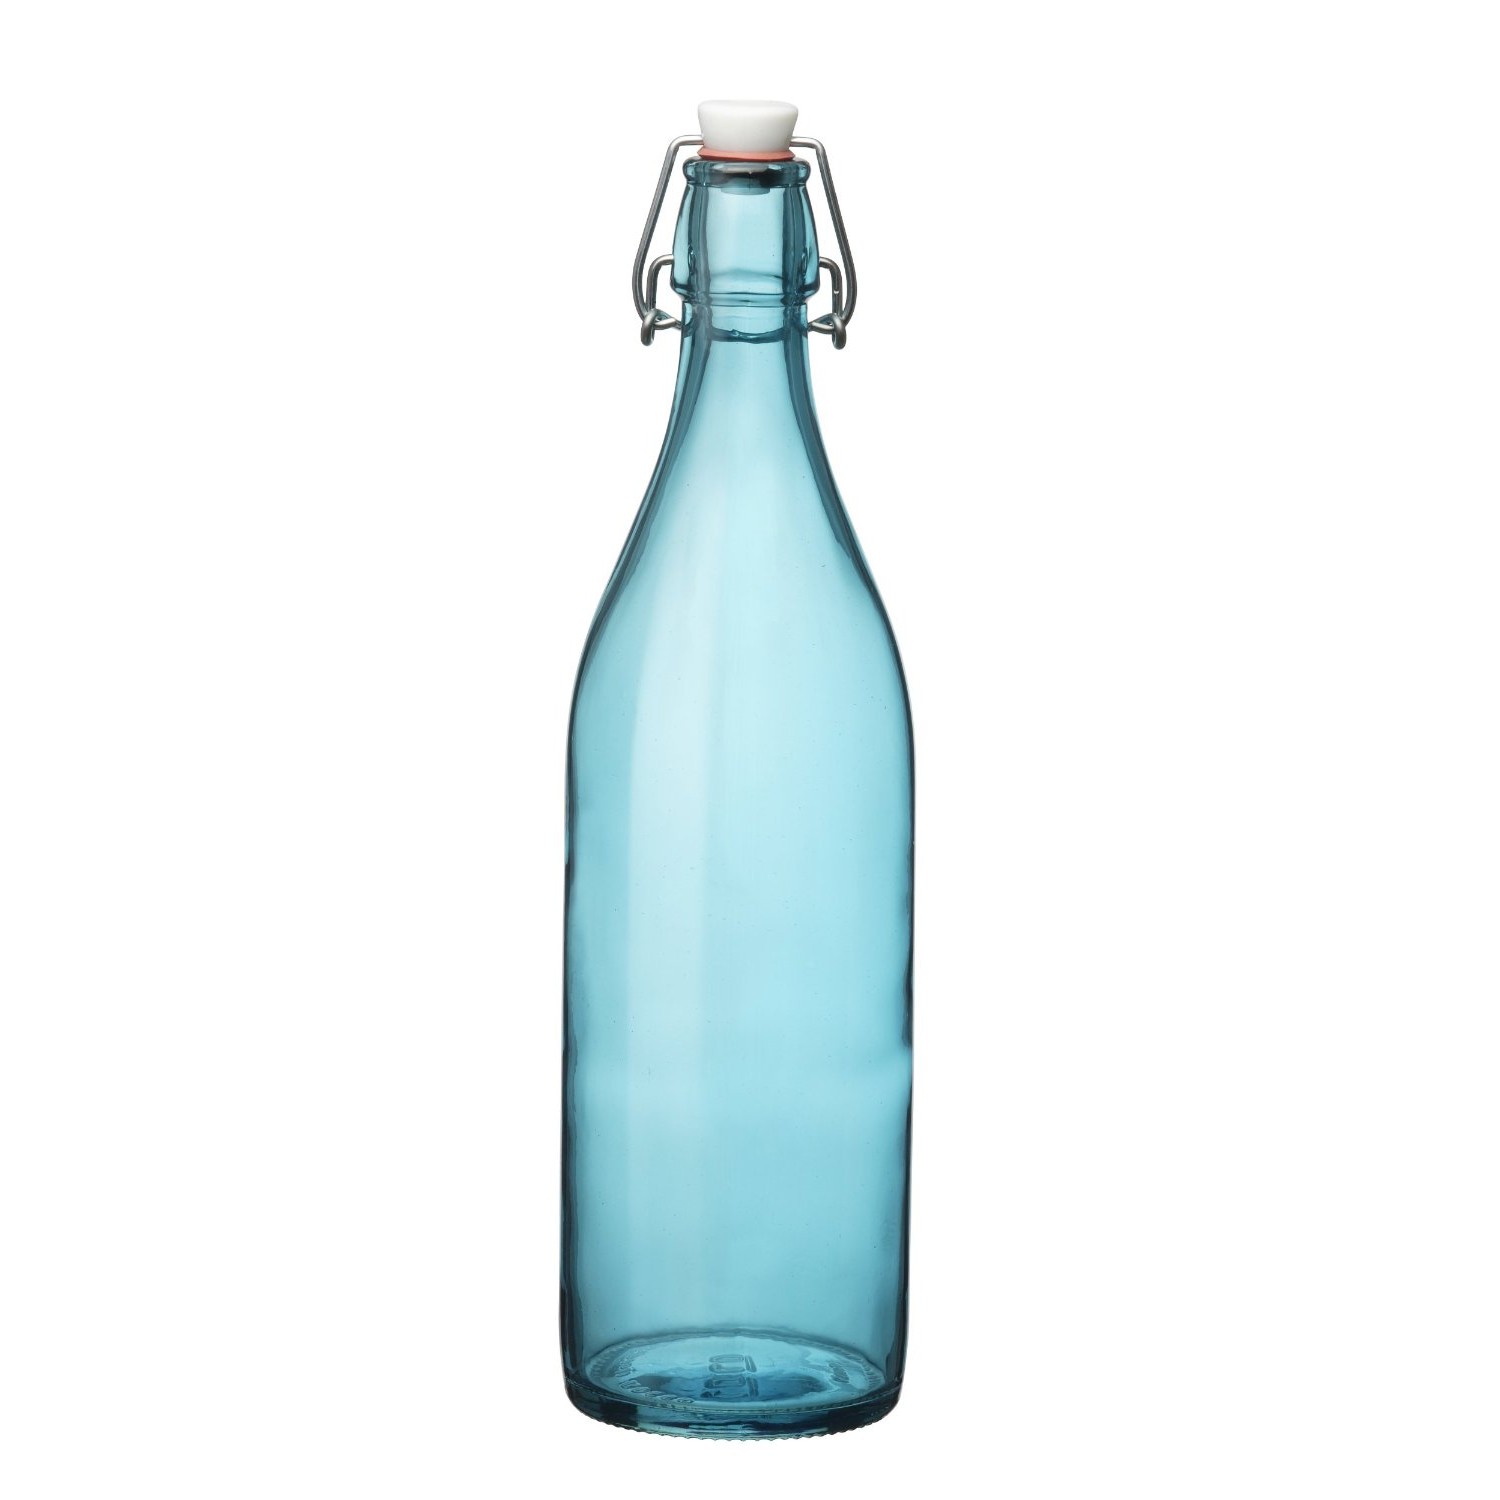 Bottle #18